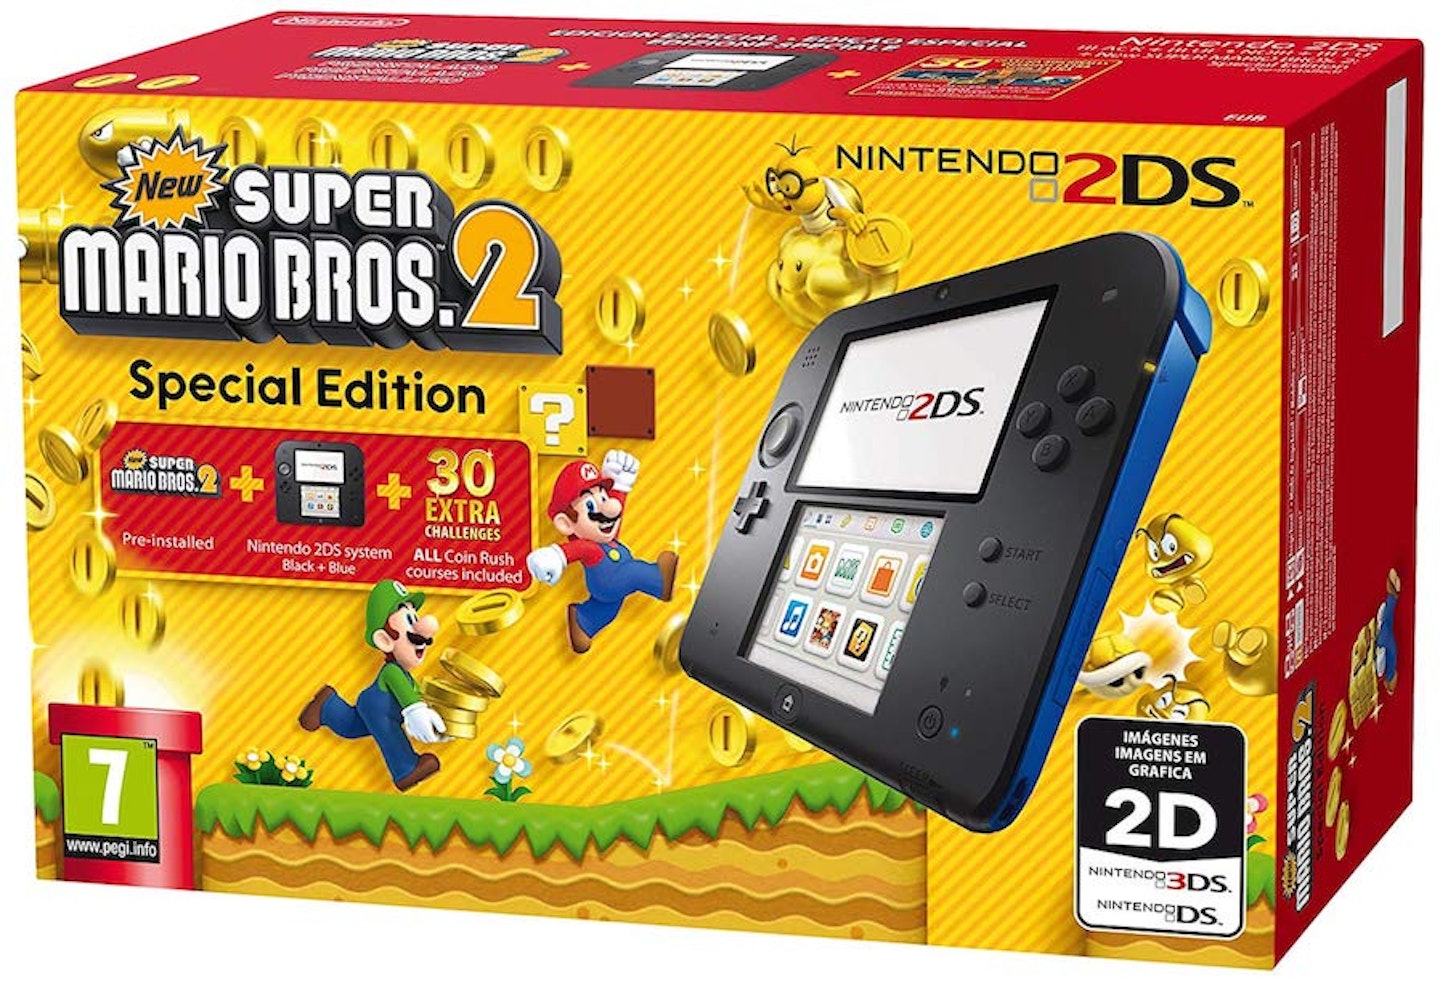 Nintendo Handheld Console 2DS - Black/Blue with New Super Mario Bros 2, £79.99